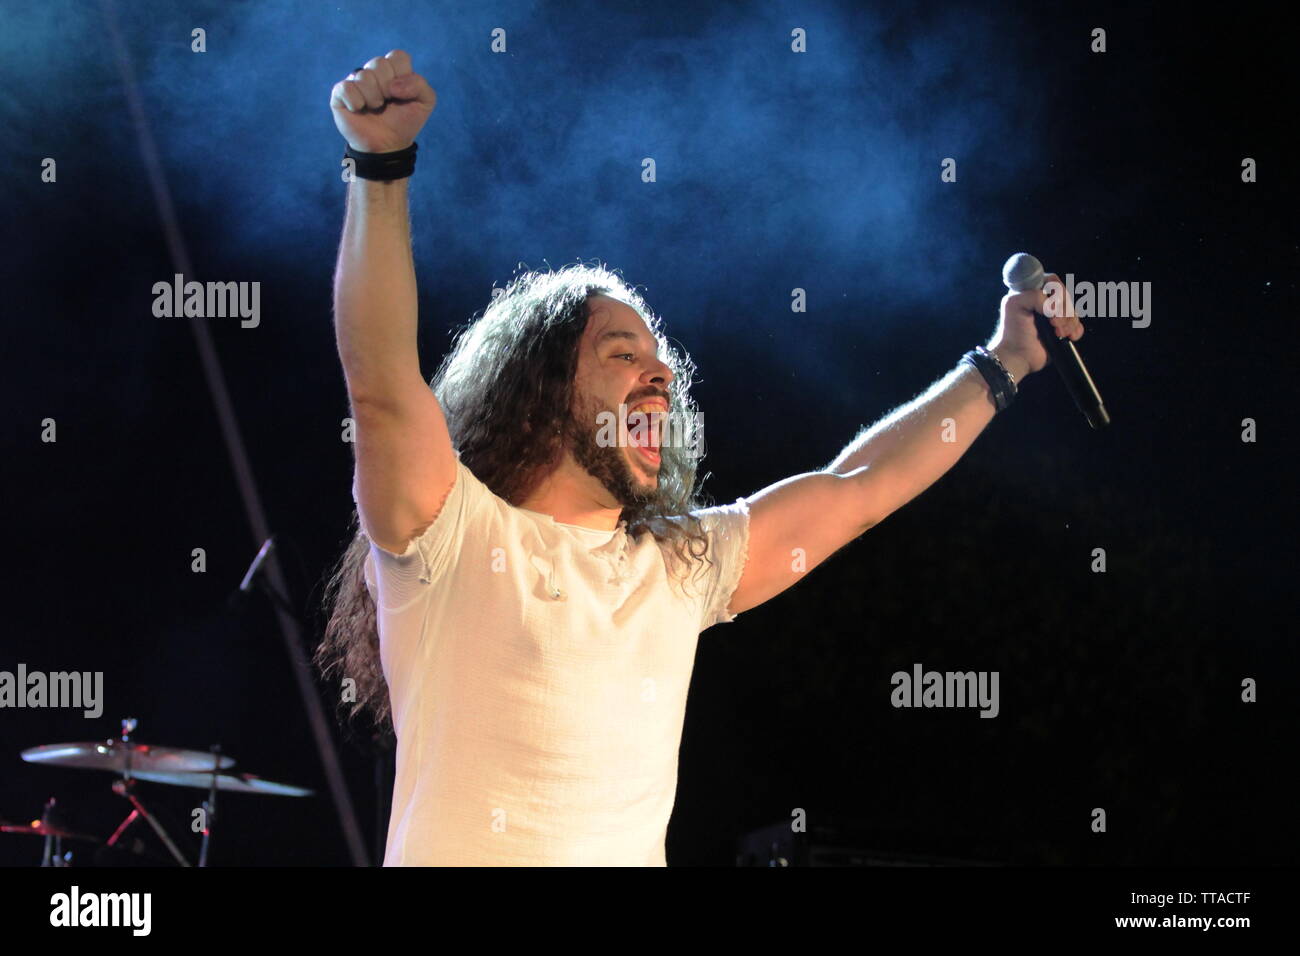 I Rhapsody of Fire live al Shock Metal Fest 2019 Stock Photo - Alamy